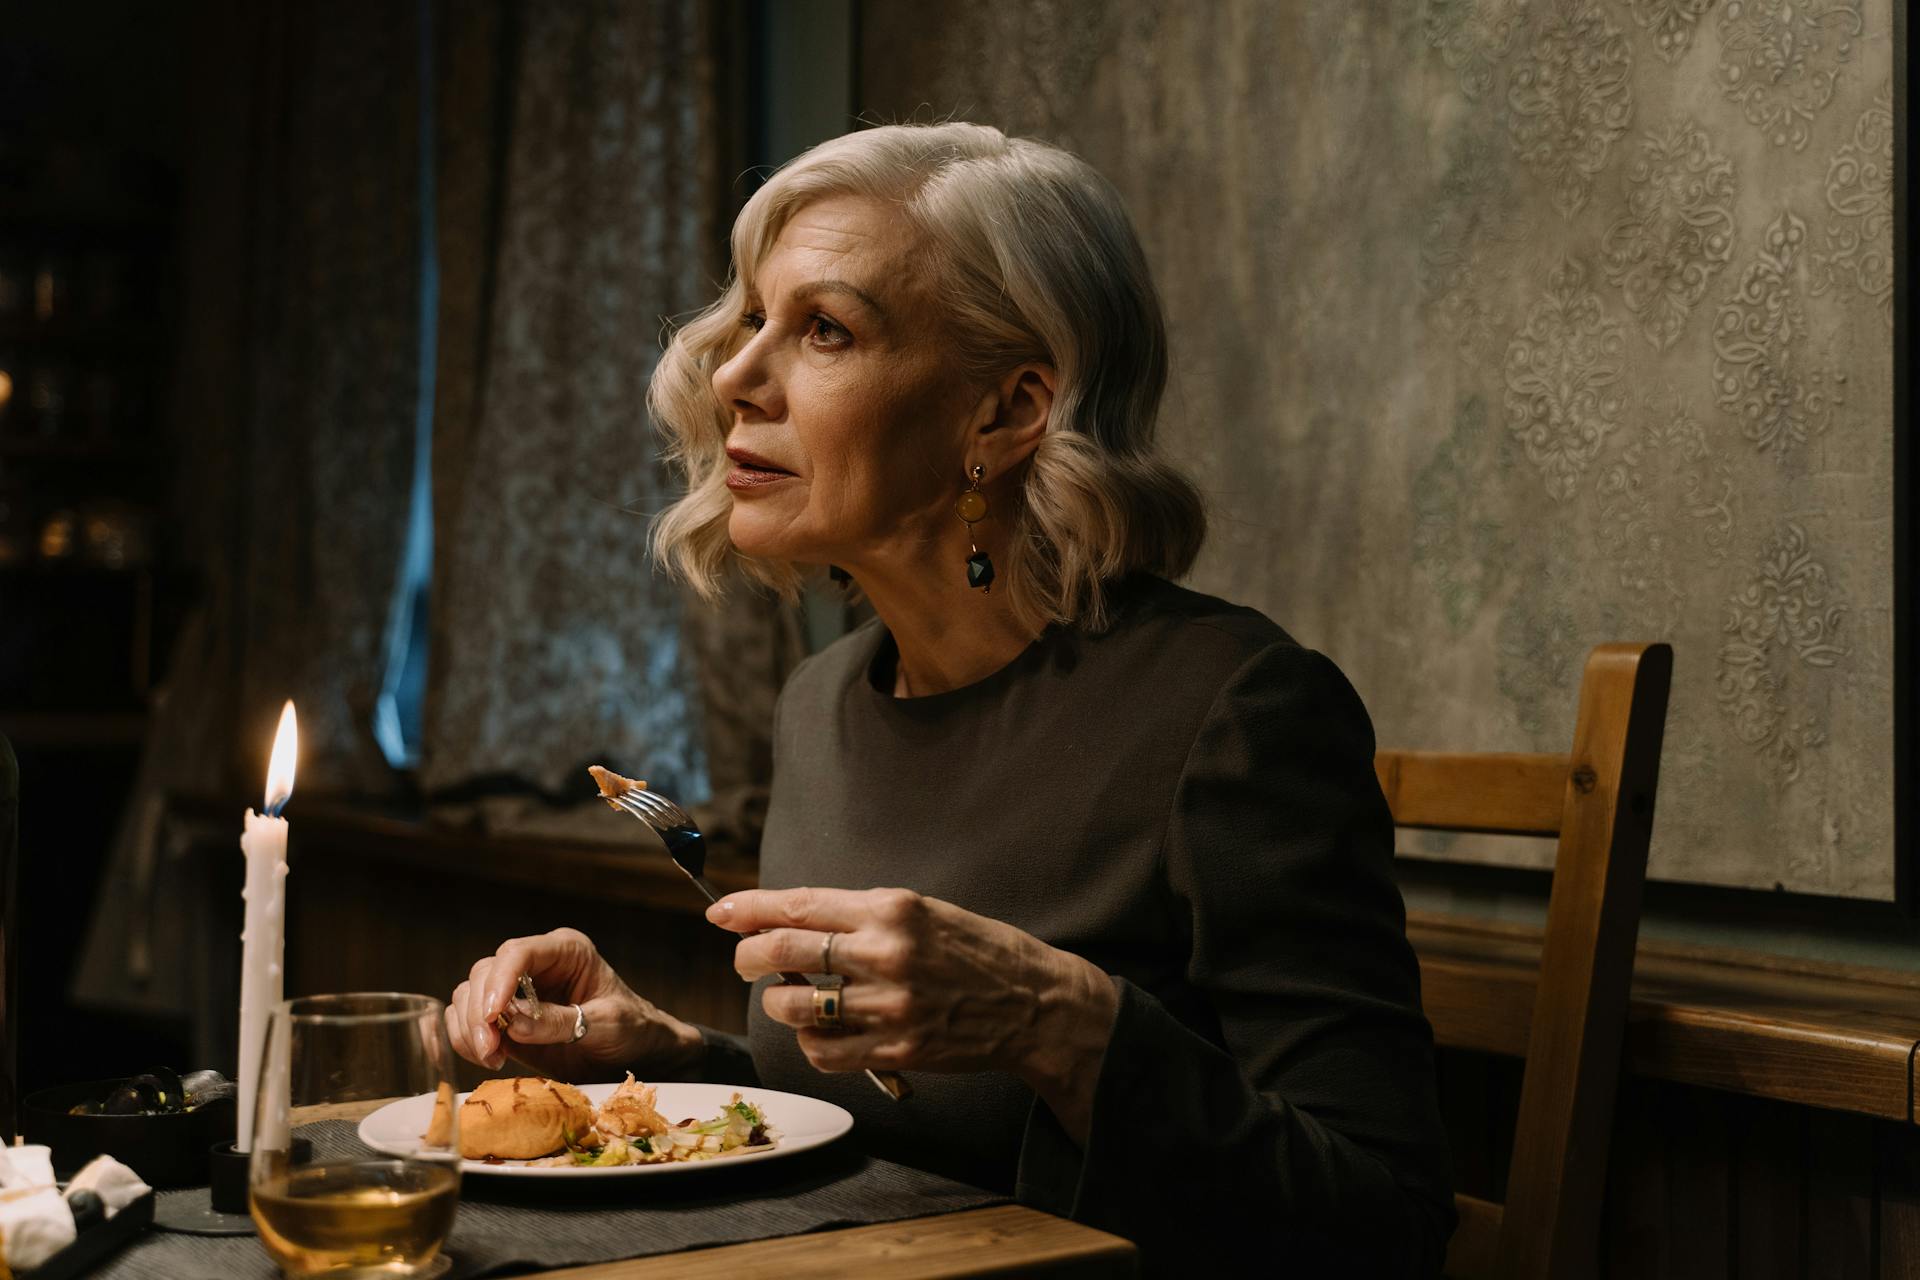 A senior woman having dinner | Source: Pexels